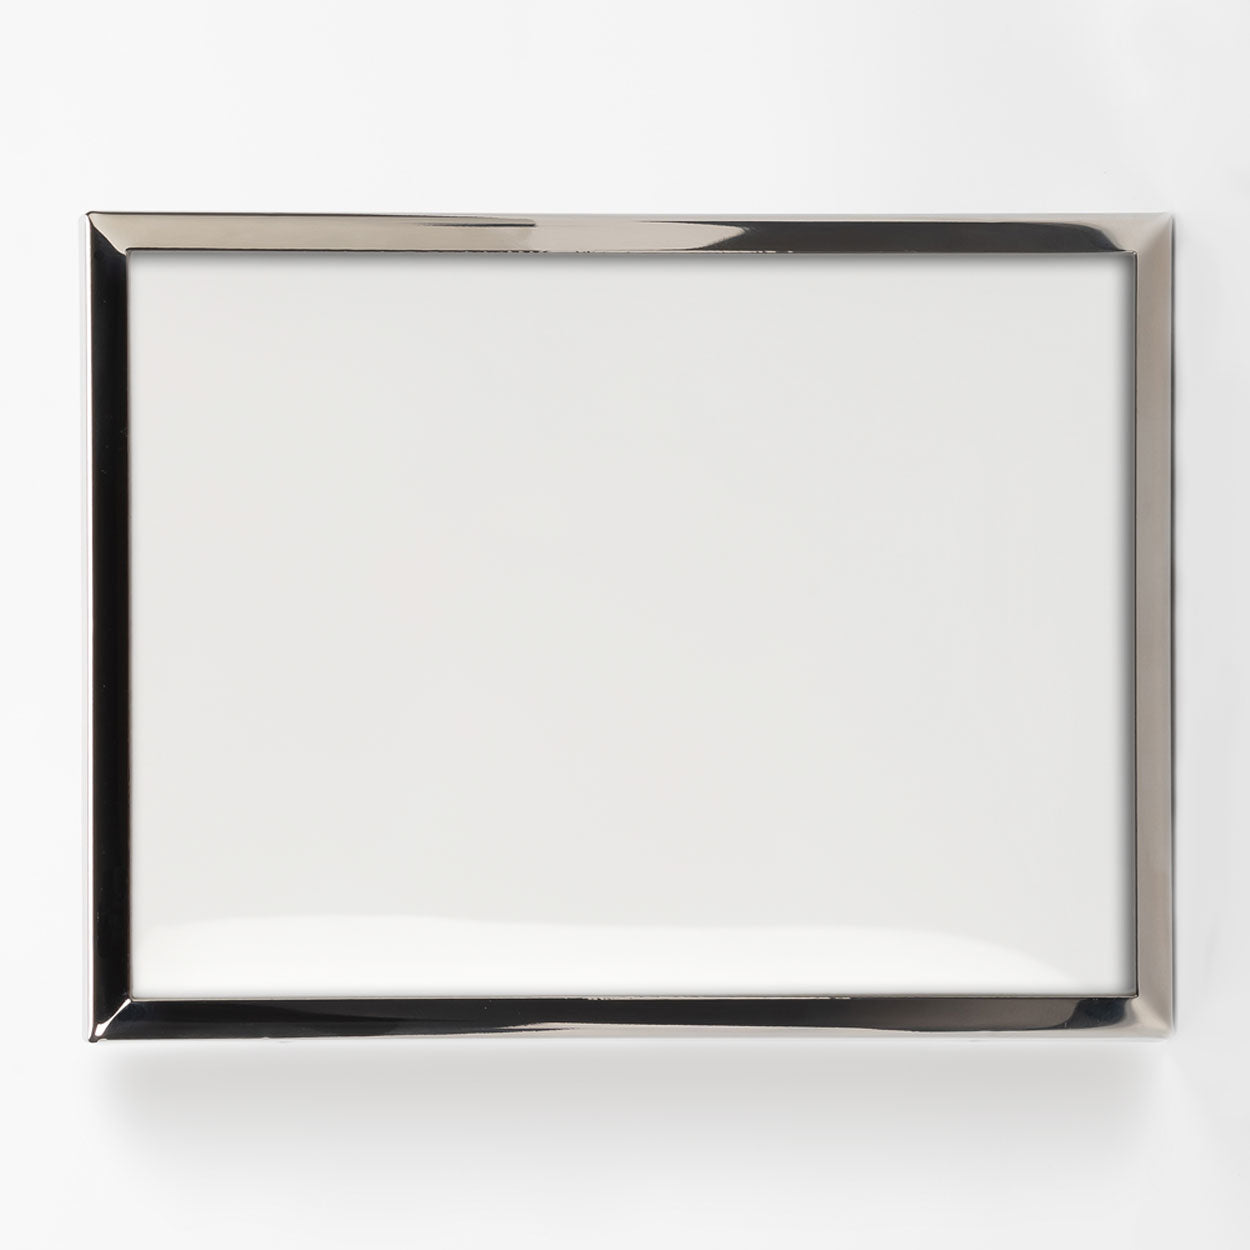 Fotocerámica rectangular con marco de acero inoxidable - Horitzontal